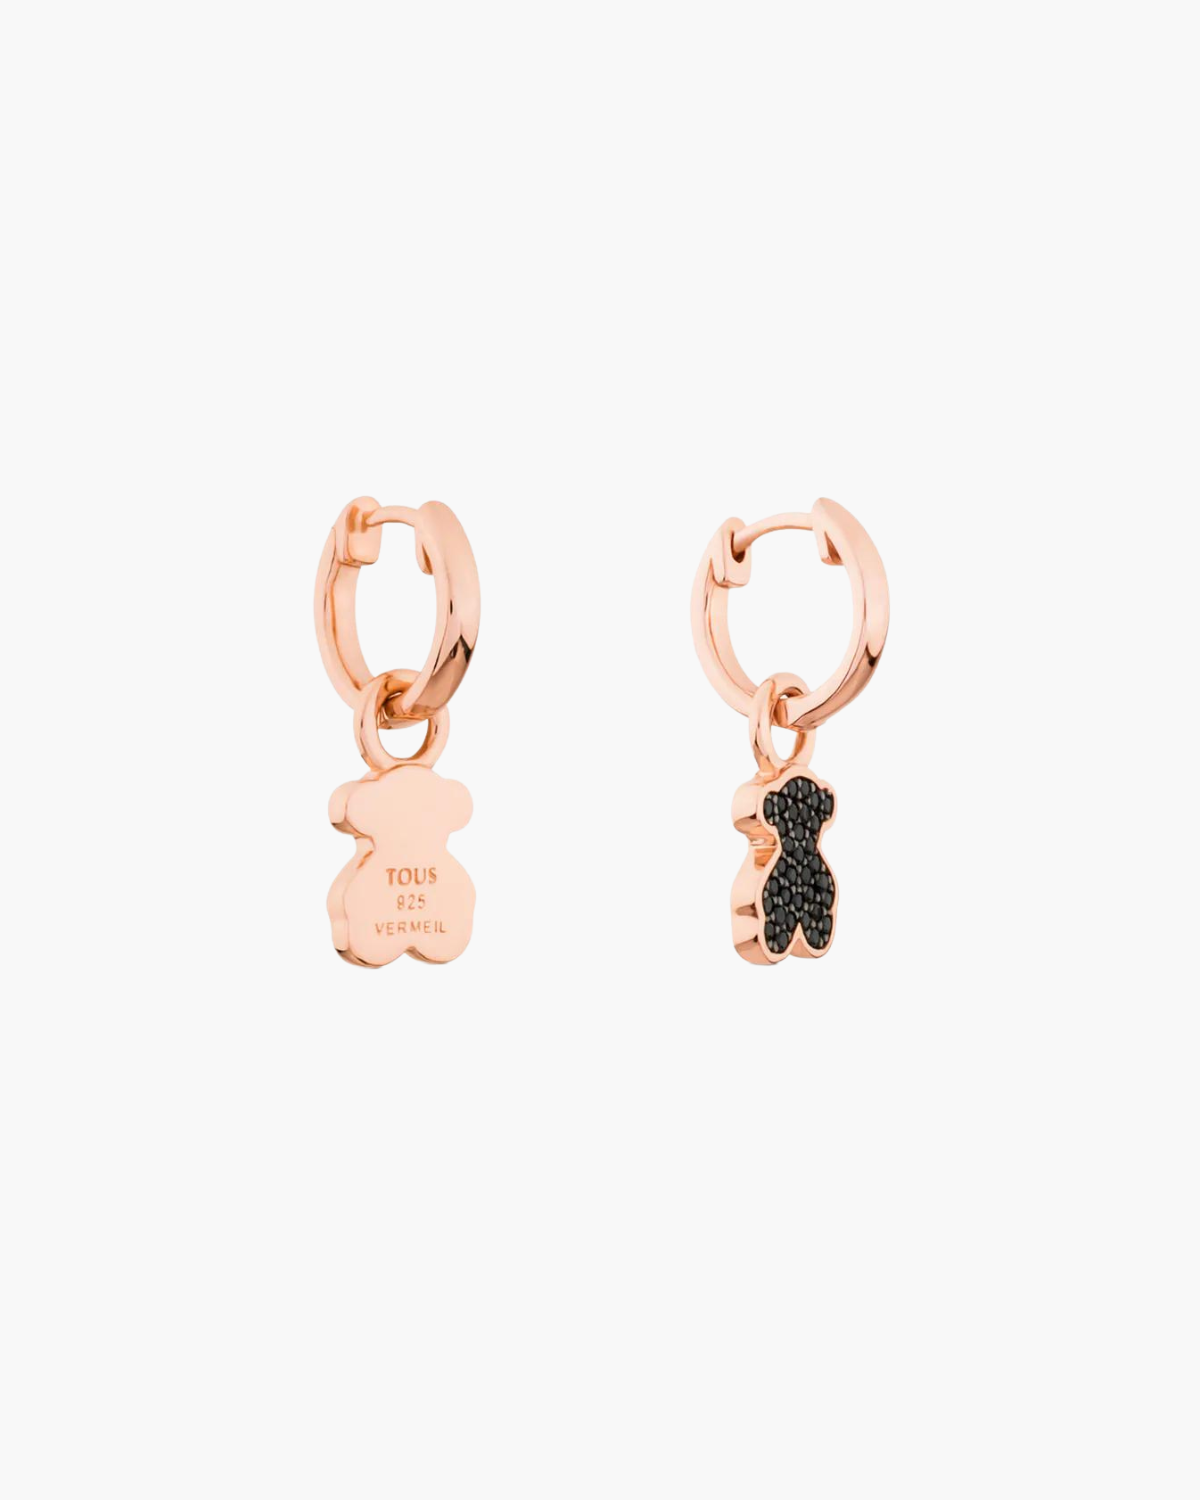 Rose Vermeil Silver TOUS Join Earrings with Spienls Bear motif – Gallery od